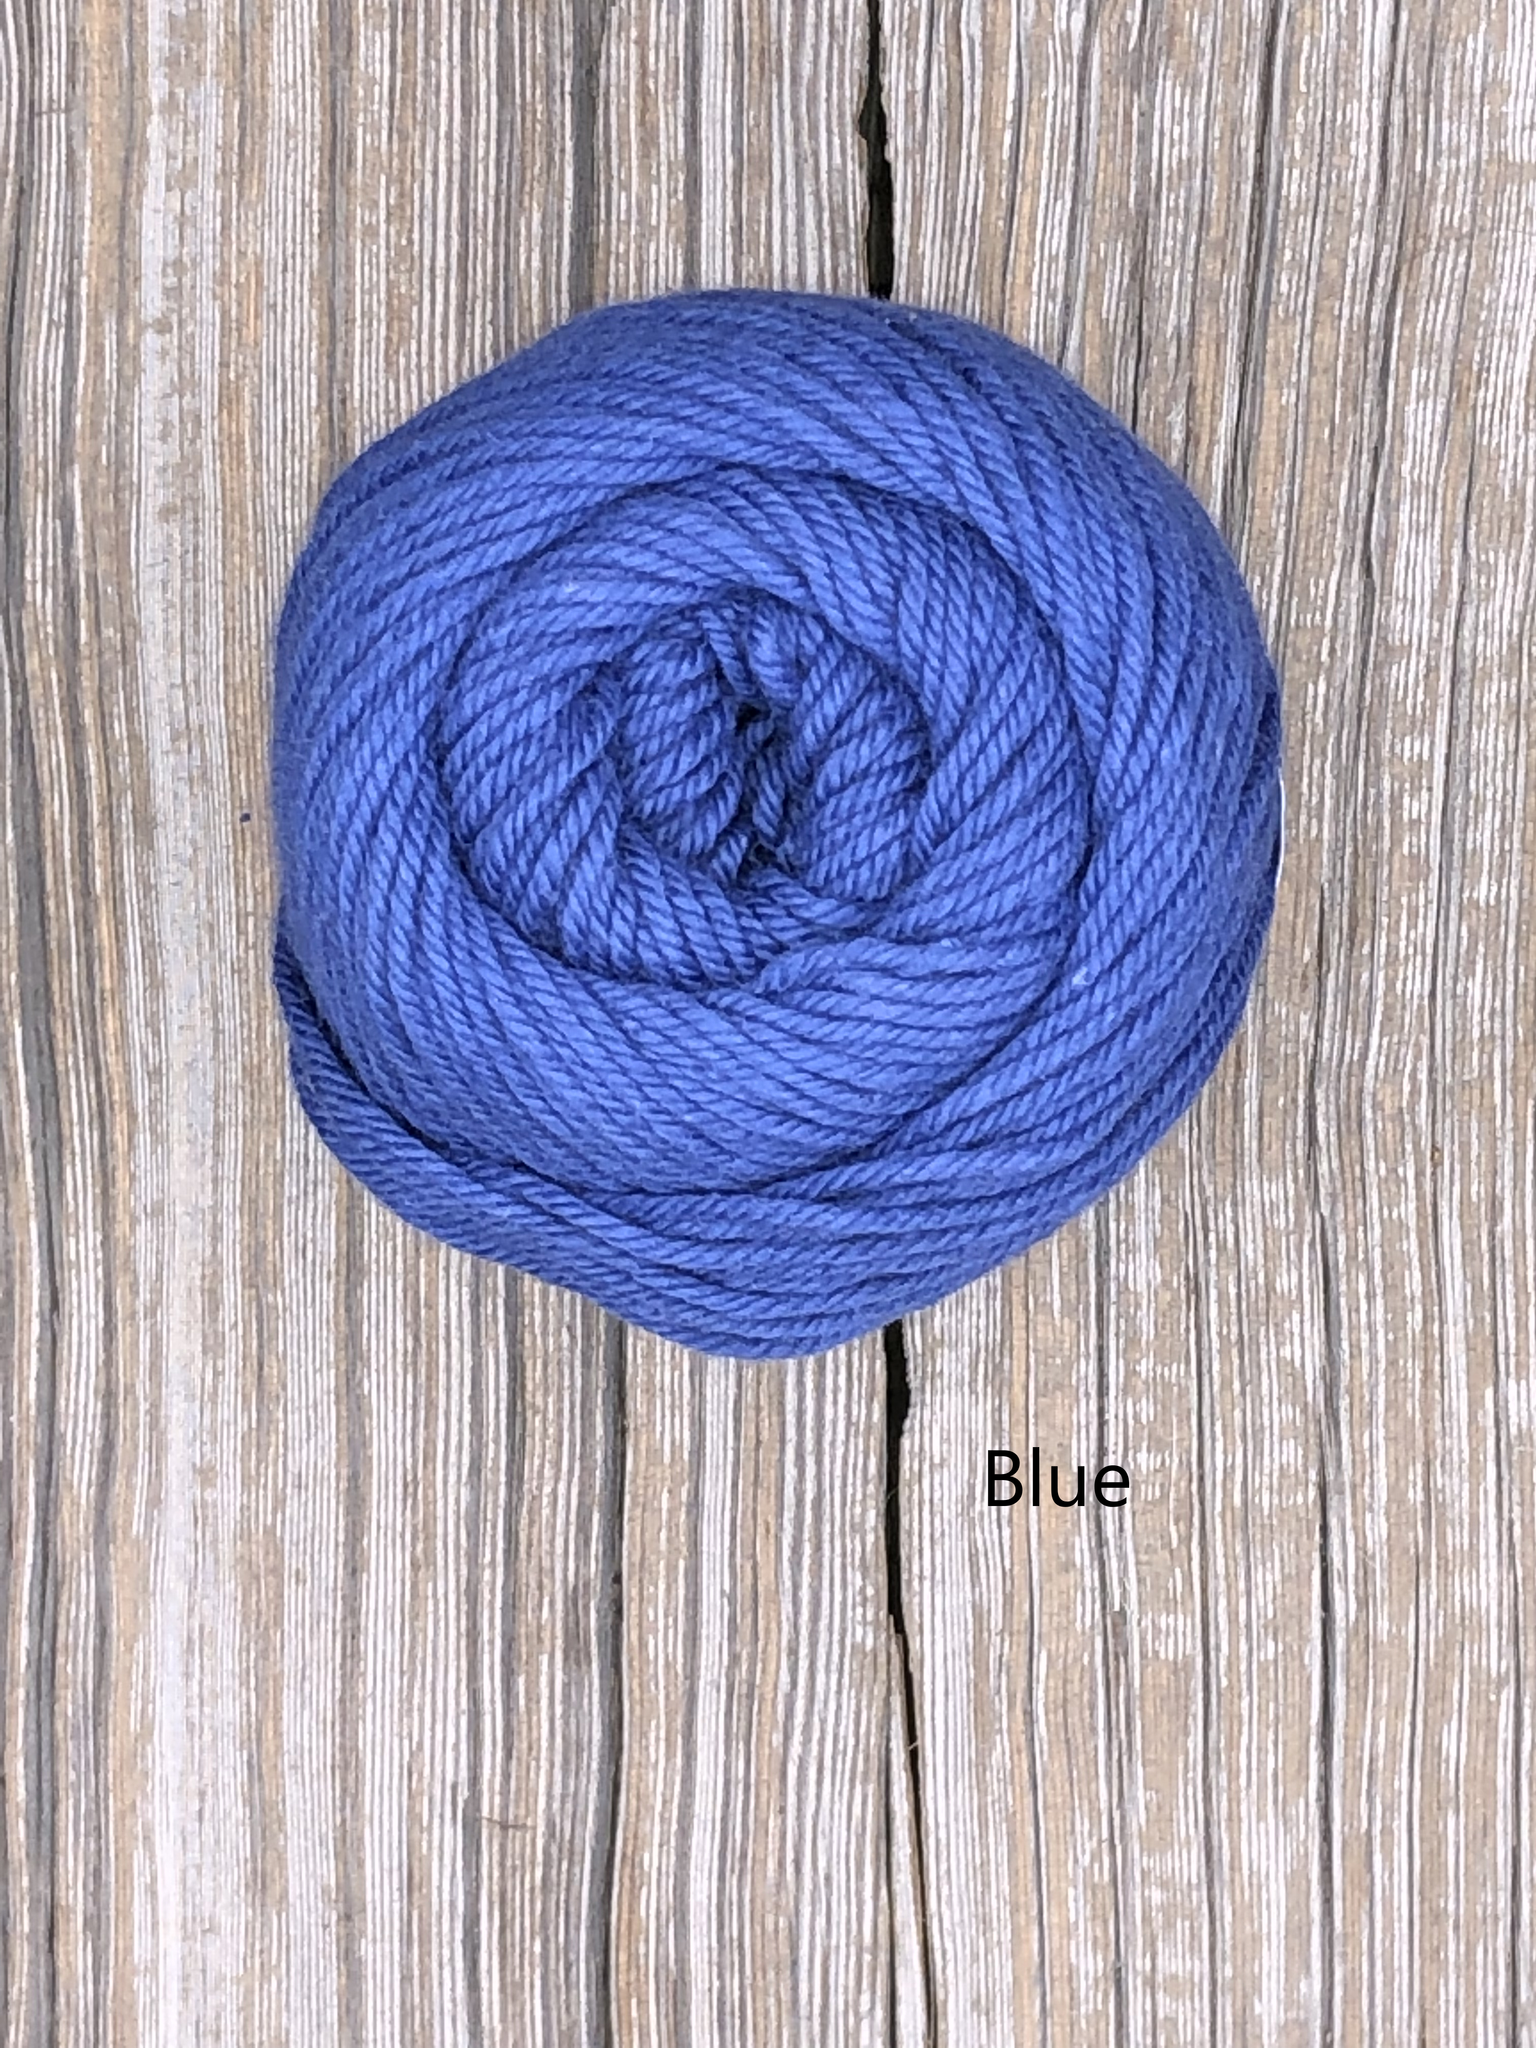 Dishie - Knit Picks – Sisu Designs Yarn Shop